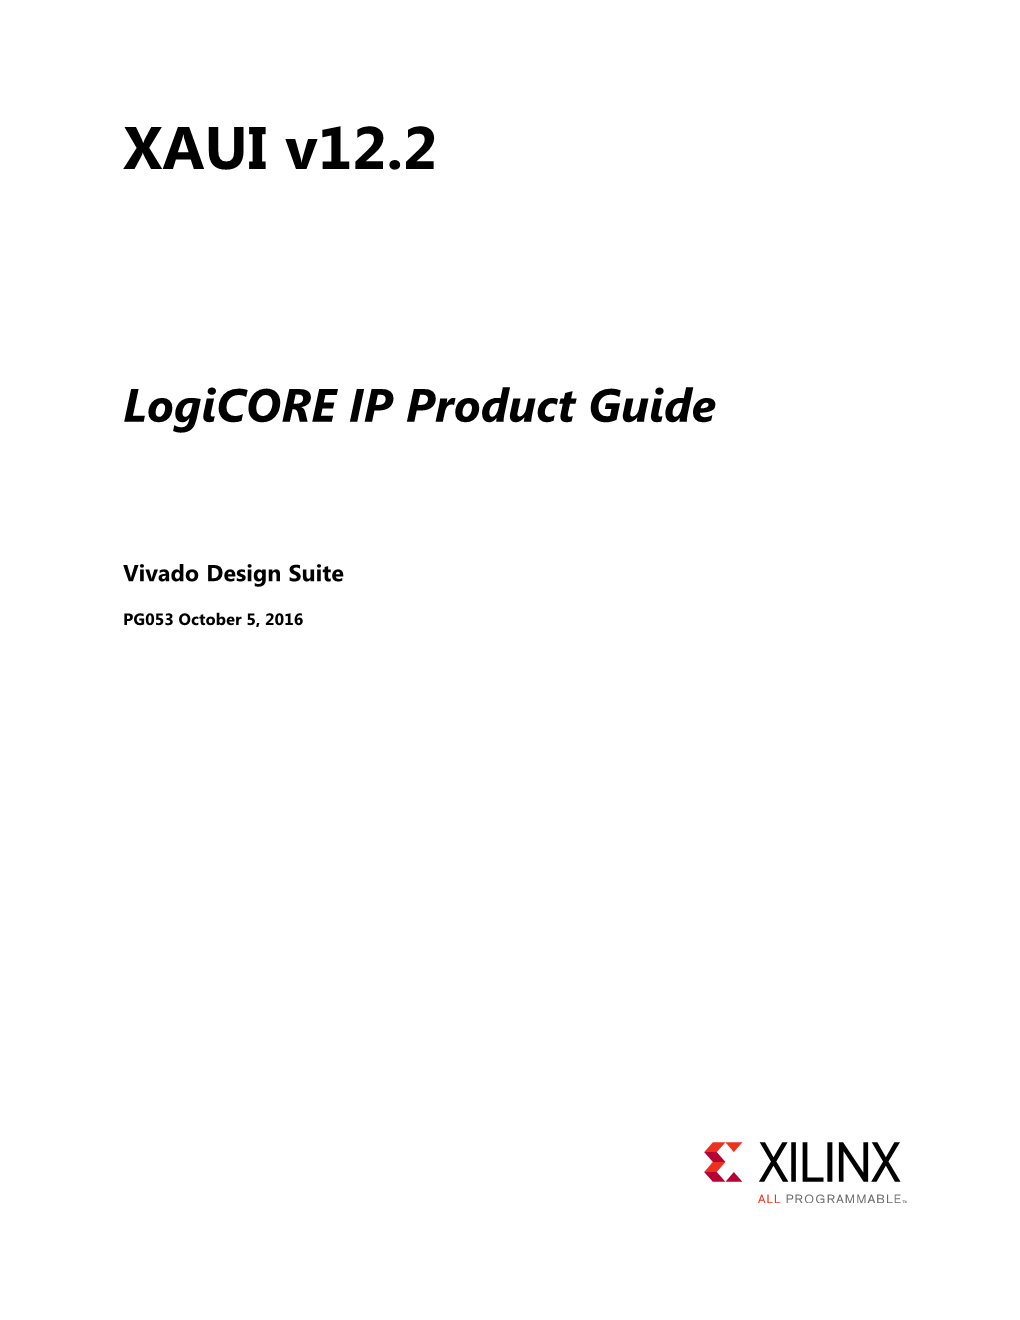 XAUI V12.2 Logicore IP Product Guide (PG053)